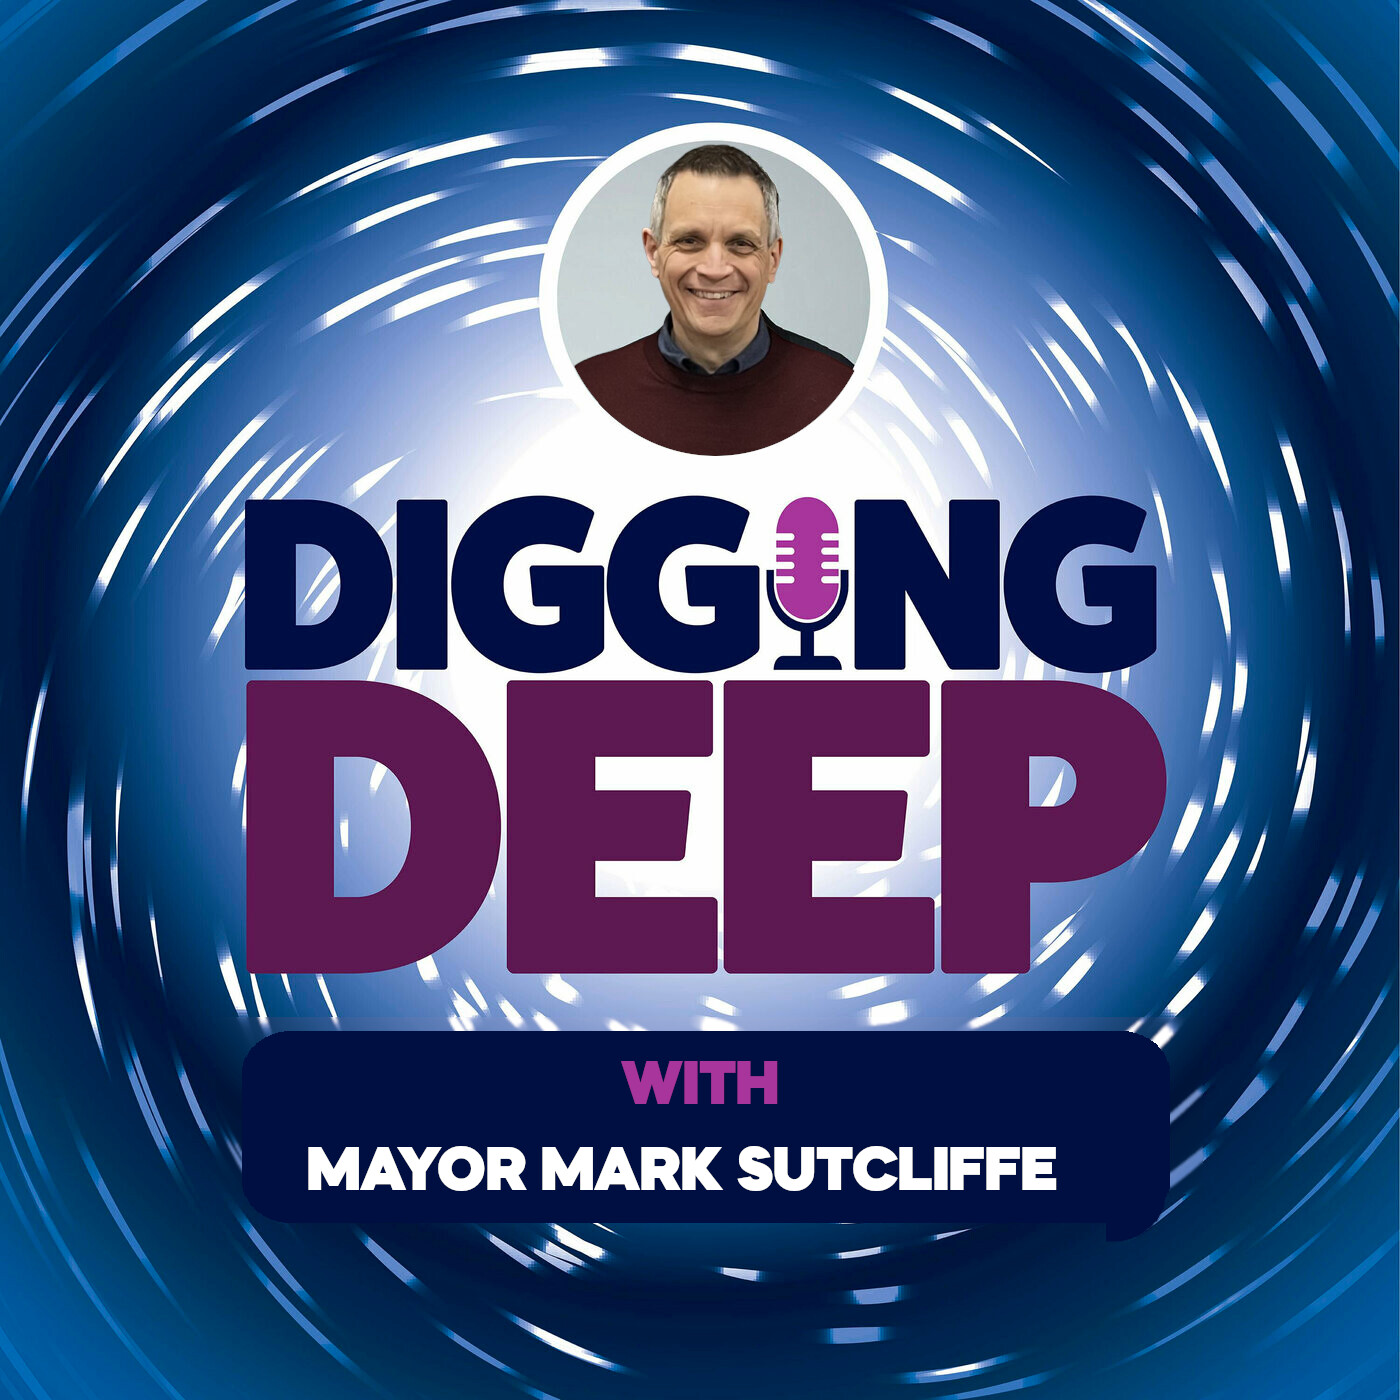 Digging Deep with Daniel Alfredsson